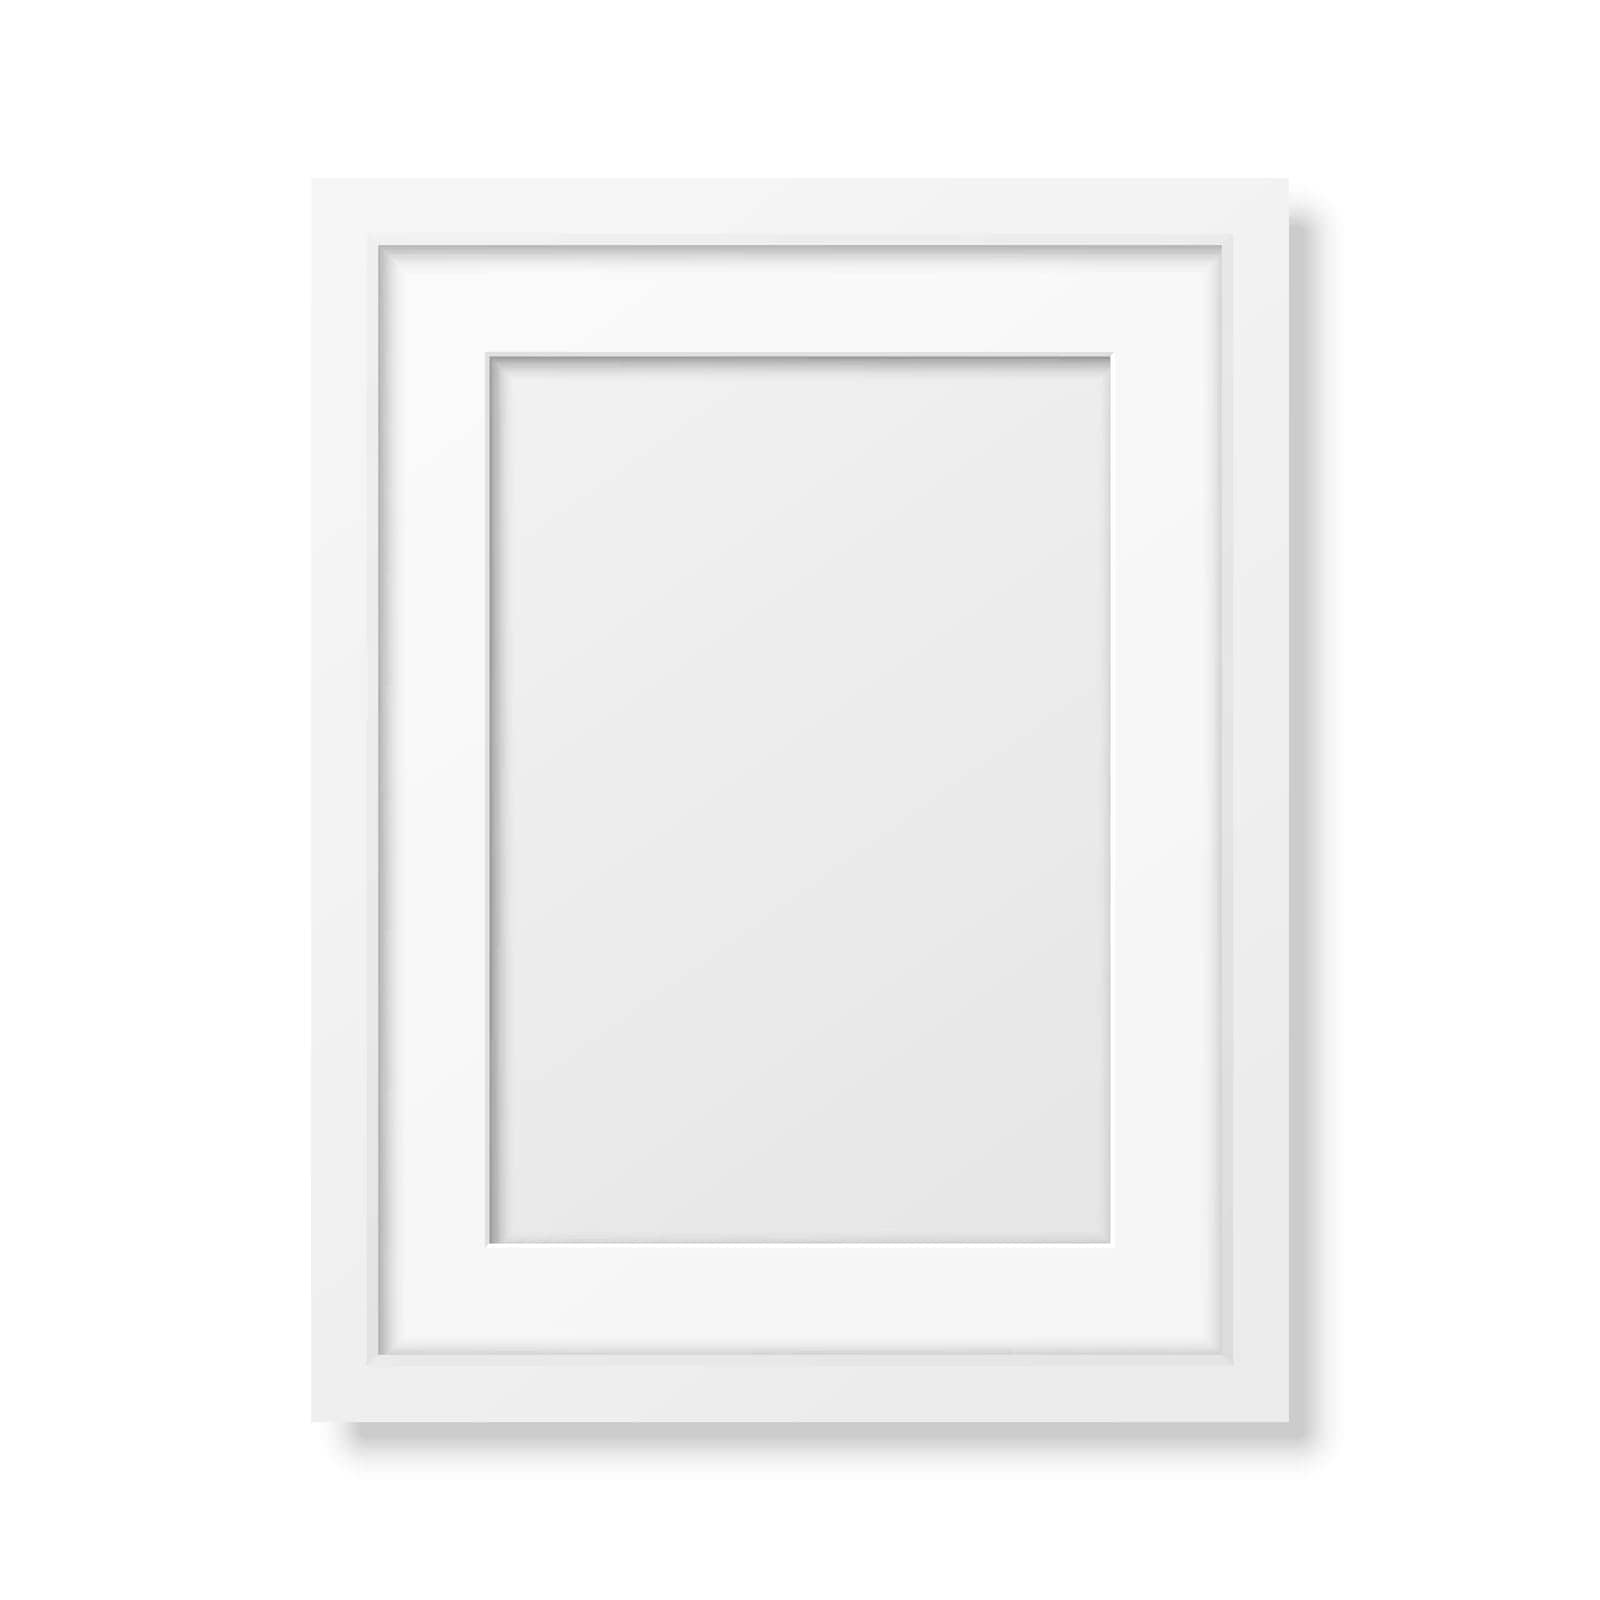 Realistic white frame A4 by Gomolach